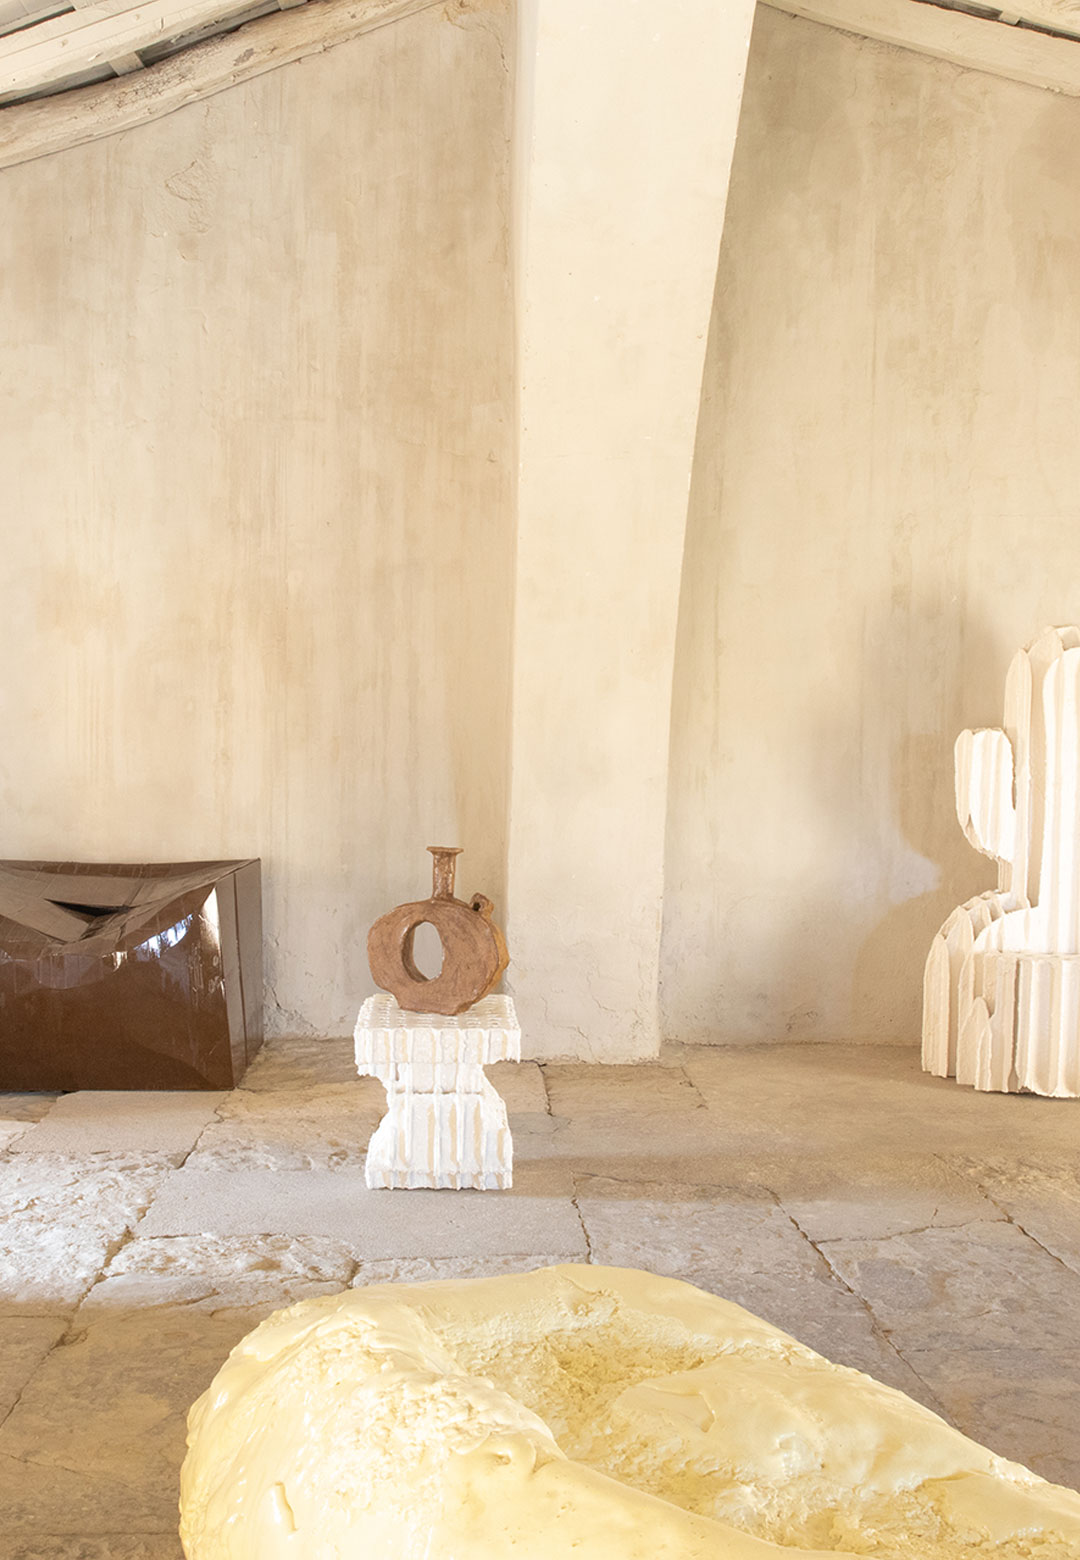 Nebil Zaman presents plastered sculptural furniture at Side Gallery